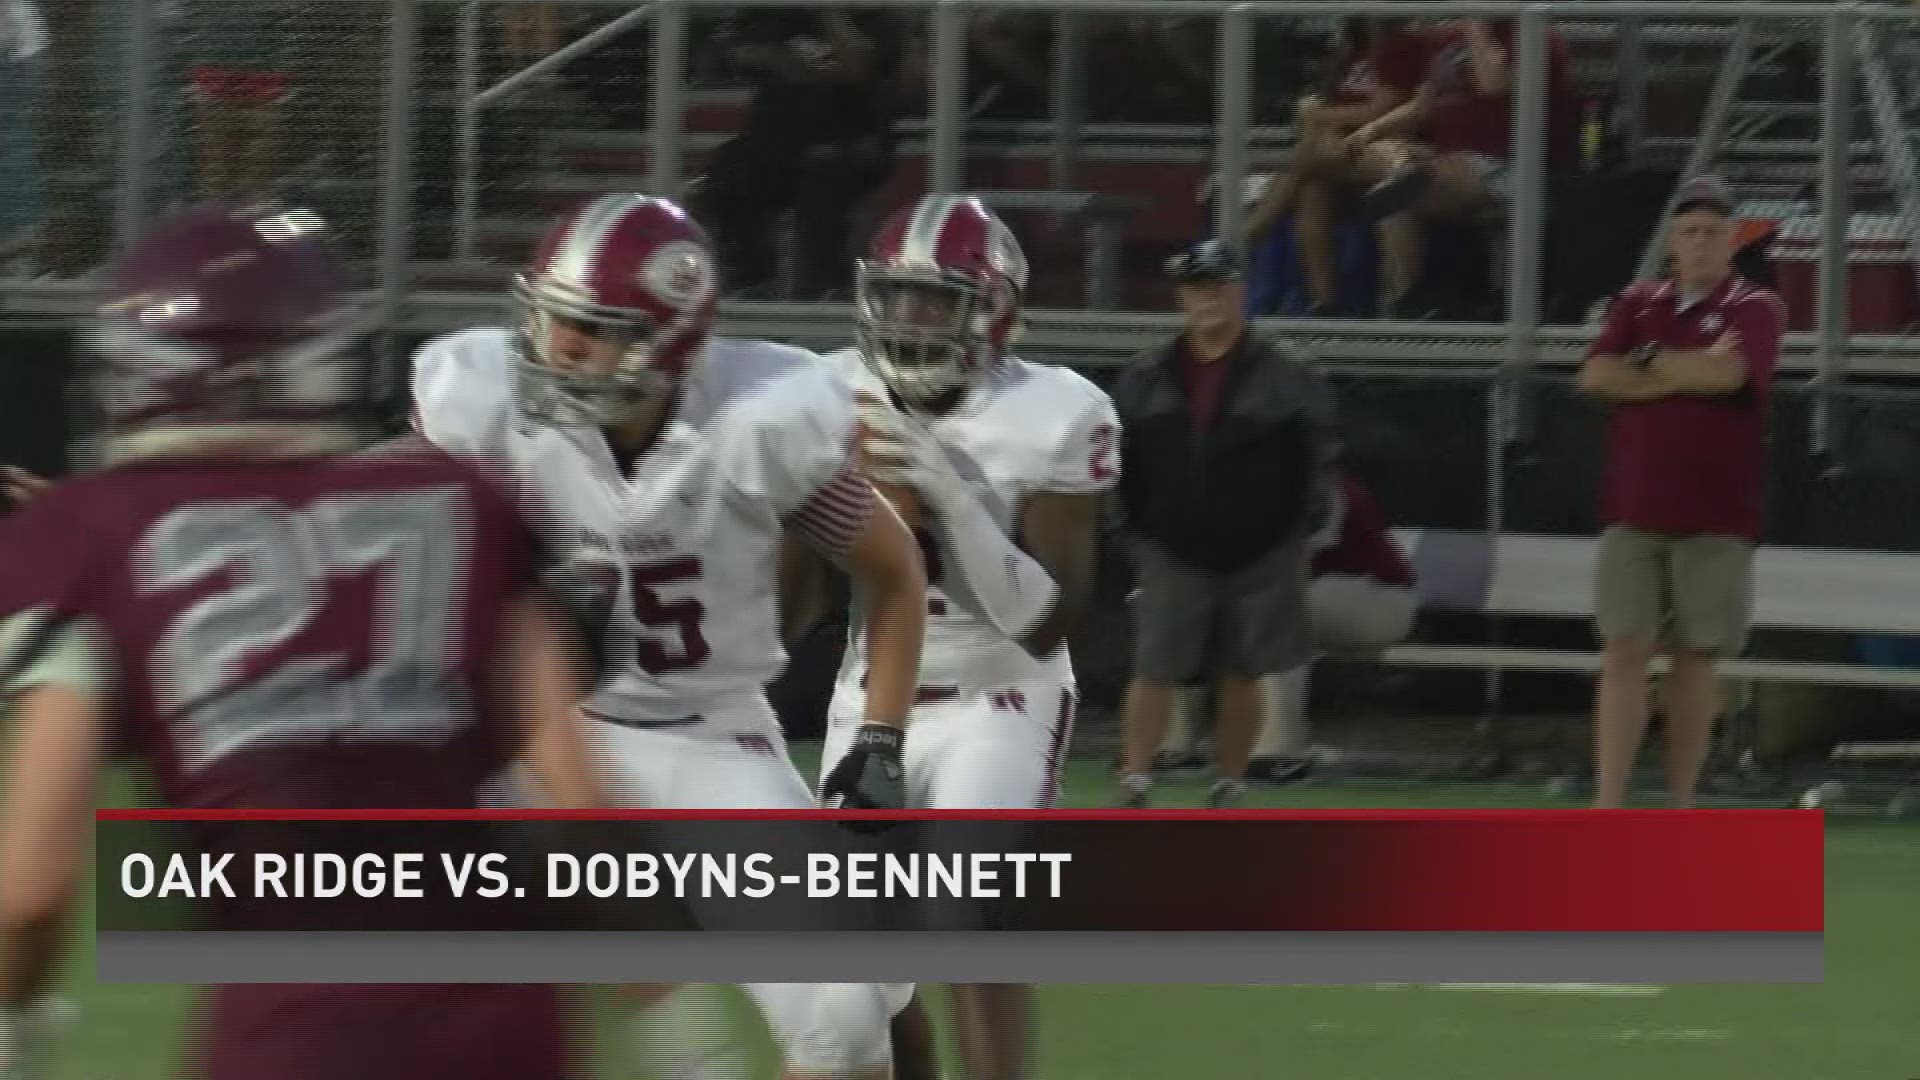 Dobyns-Bennett beats Oak Ridge